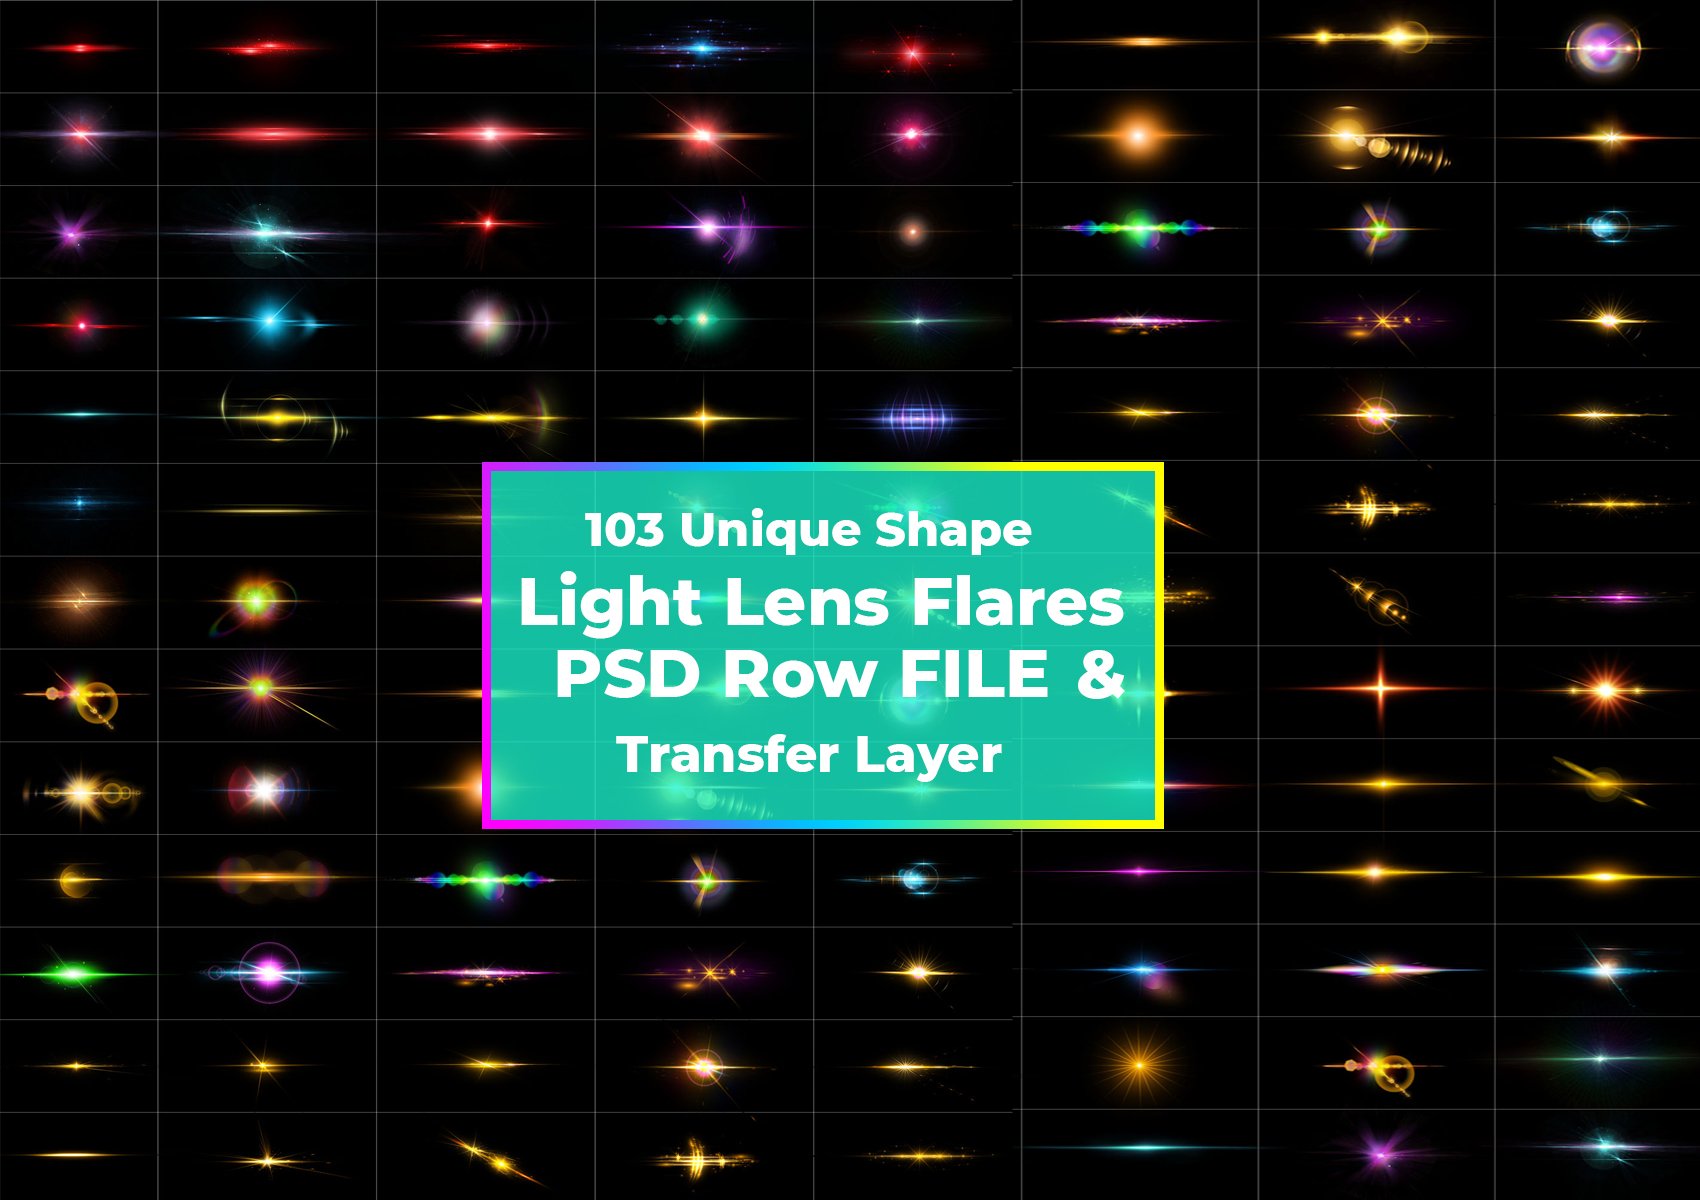 Lens Flarescover image.